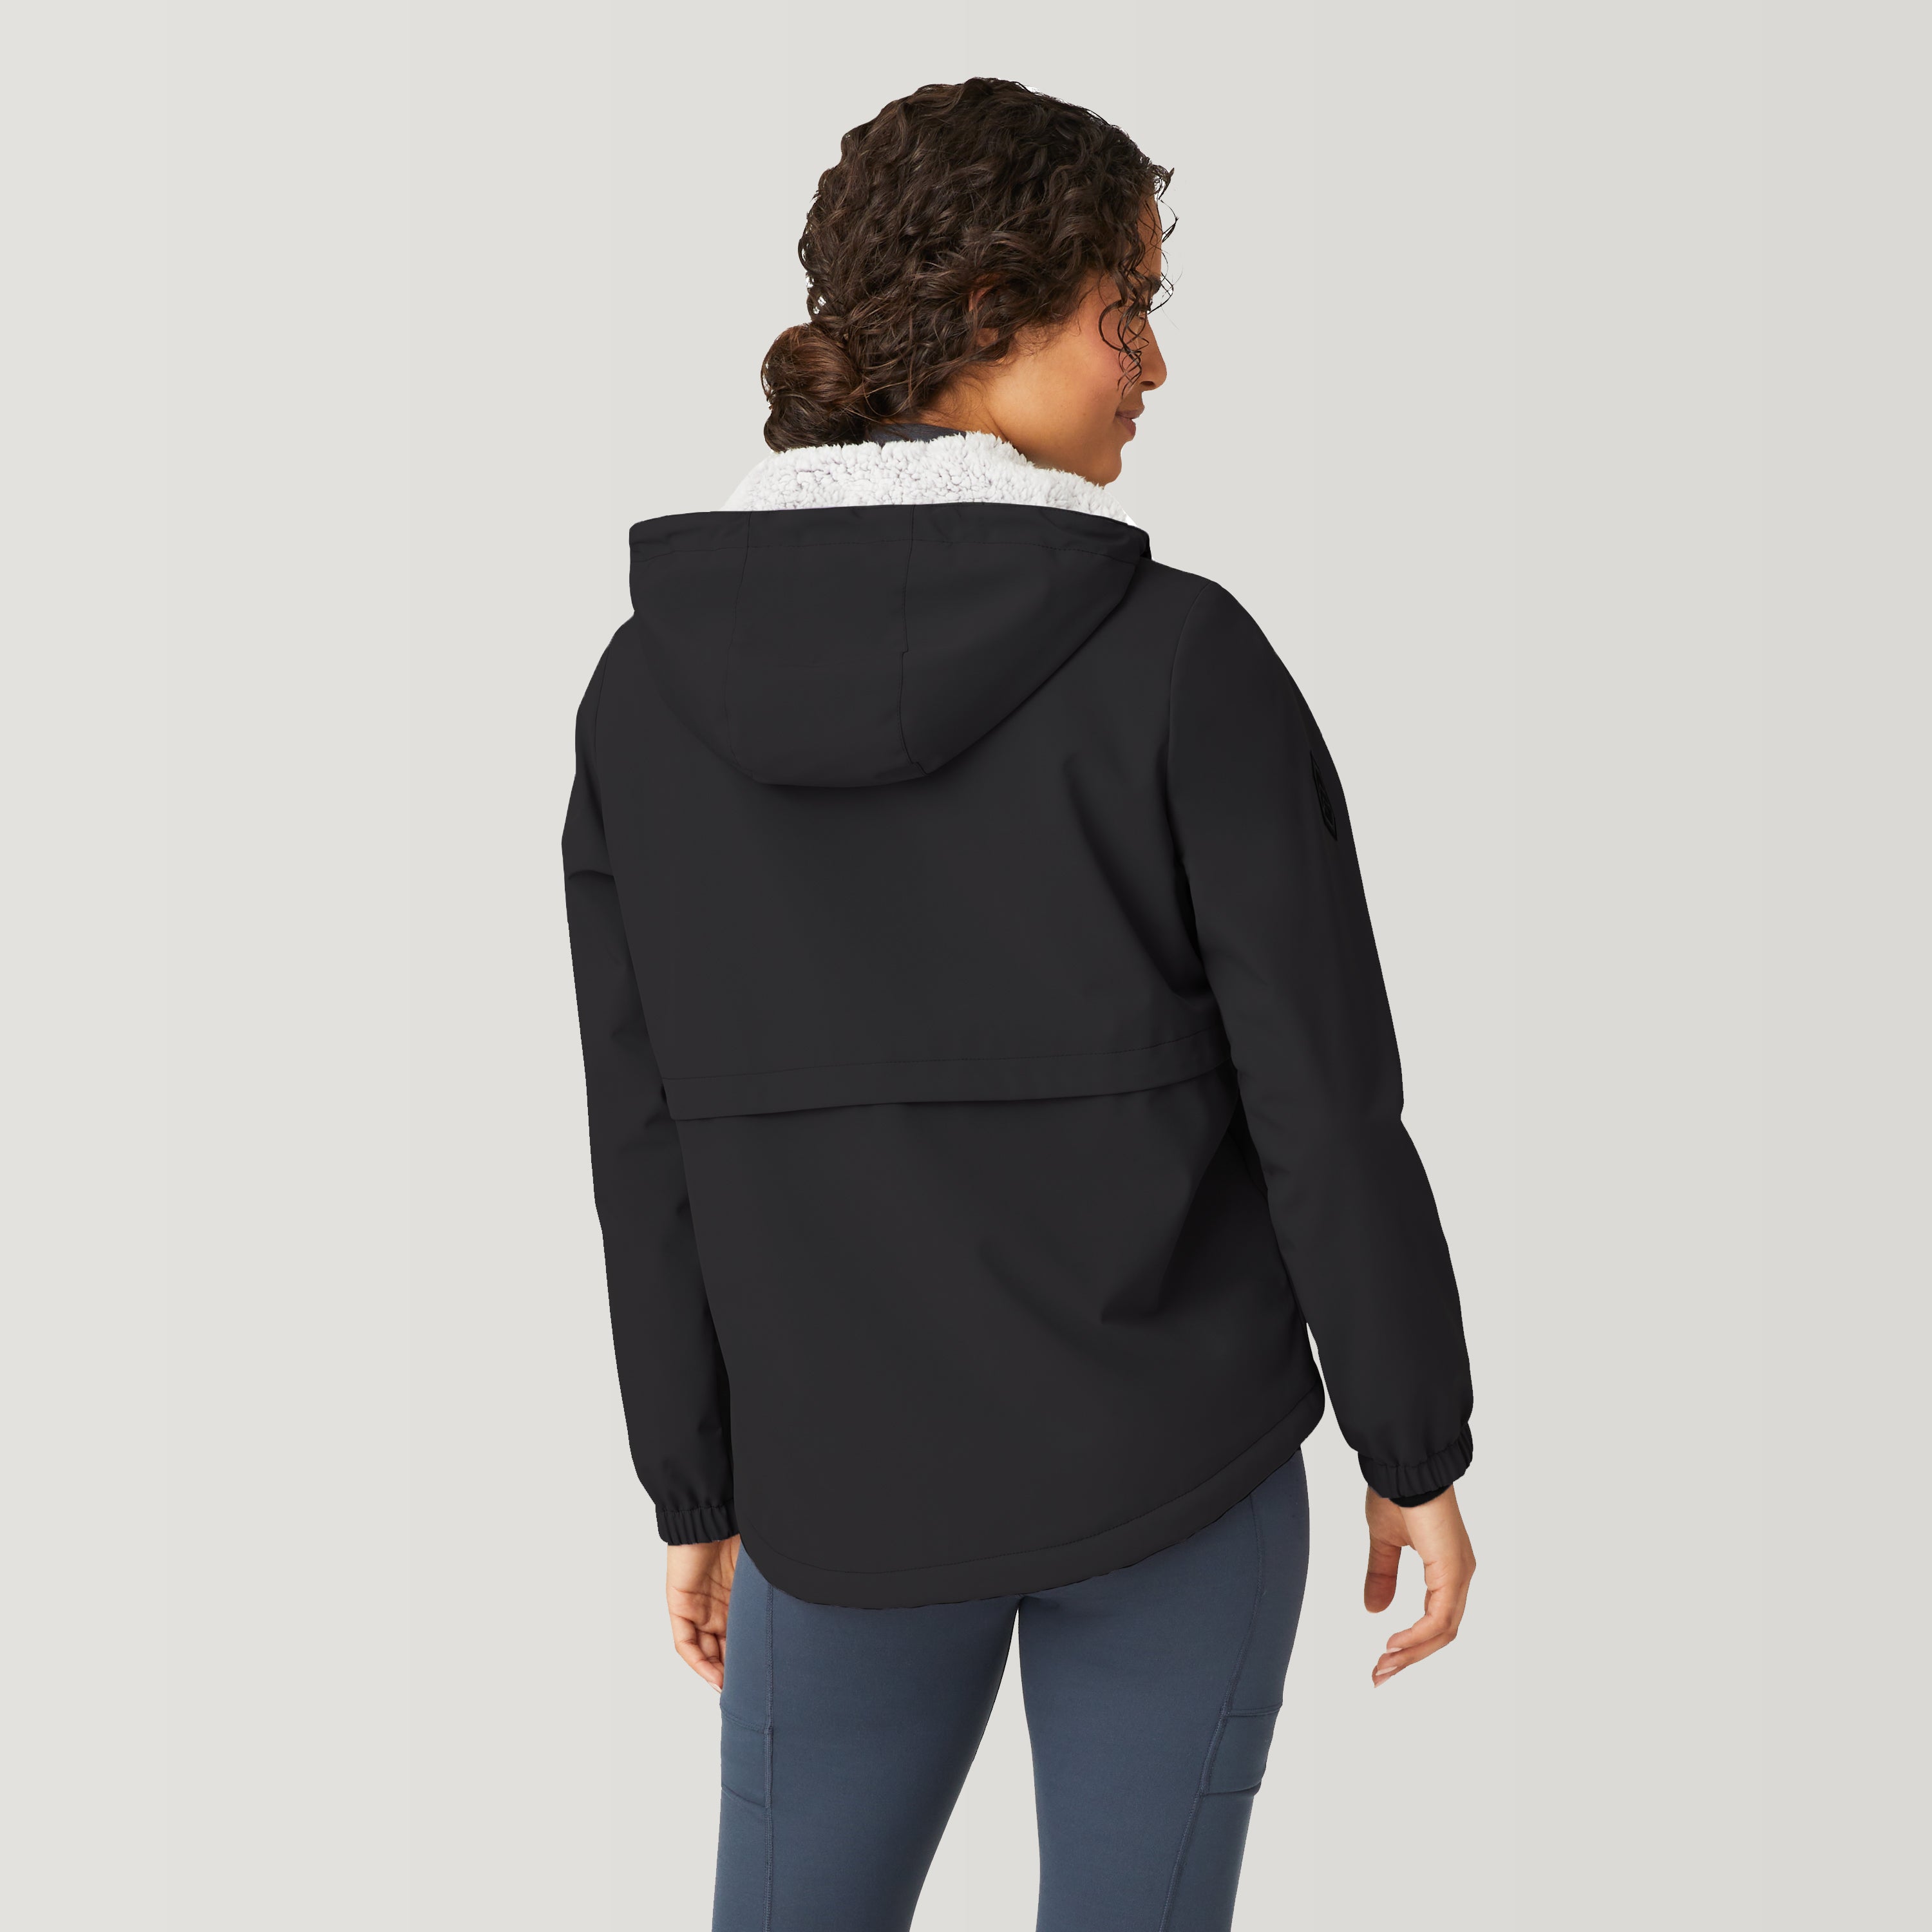 Hollister Womens XS All-Weather Jacket Black Fleece Lined Hooded